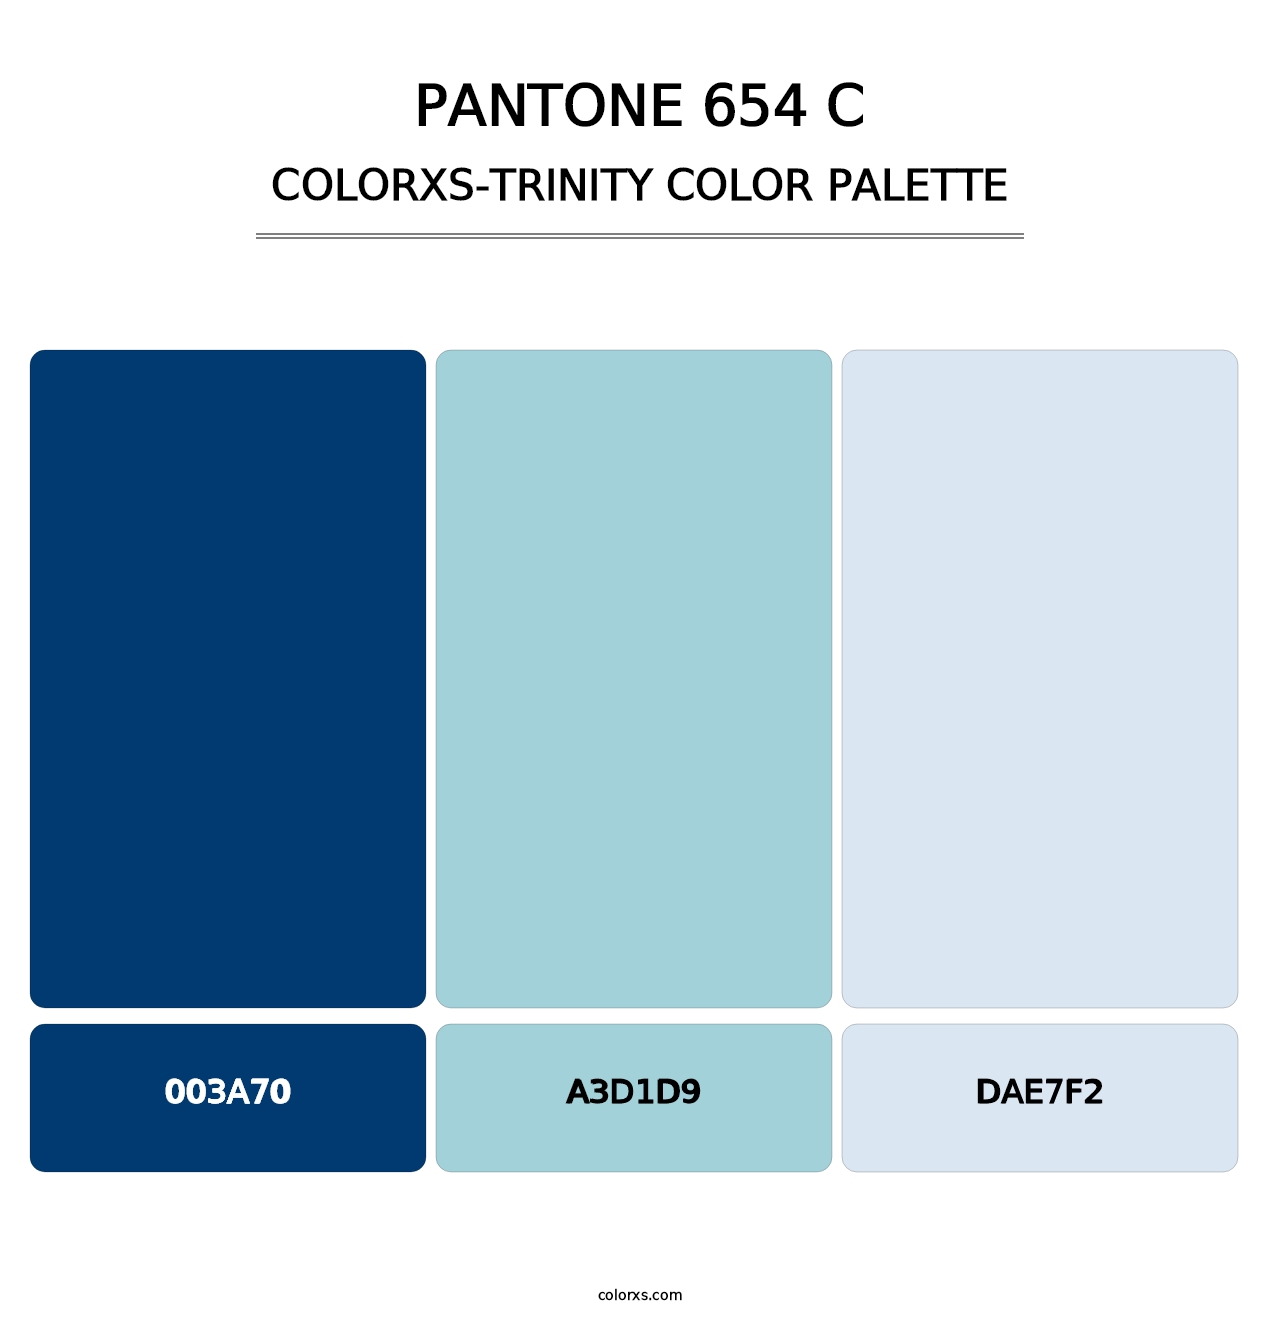 PANTONE 654 C - Colorxs Trinity Palette